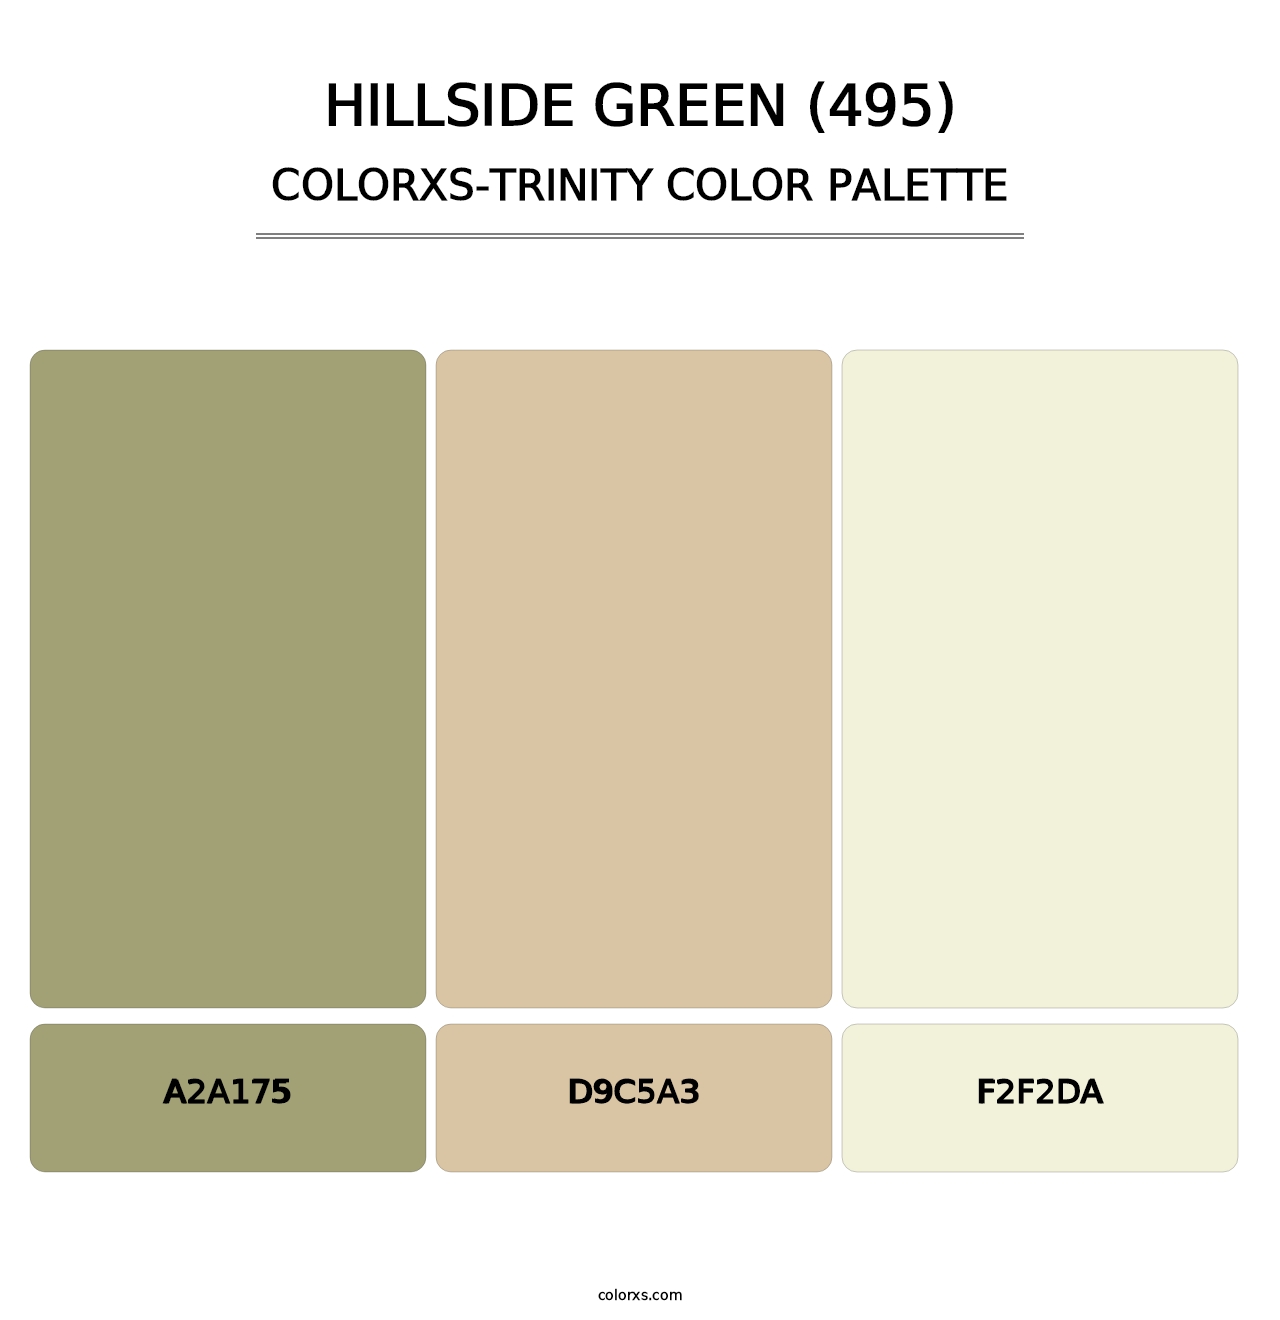 Hillside Green (495) - Colorxs Trinity Palette